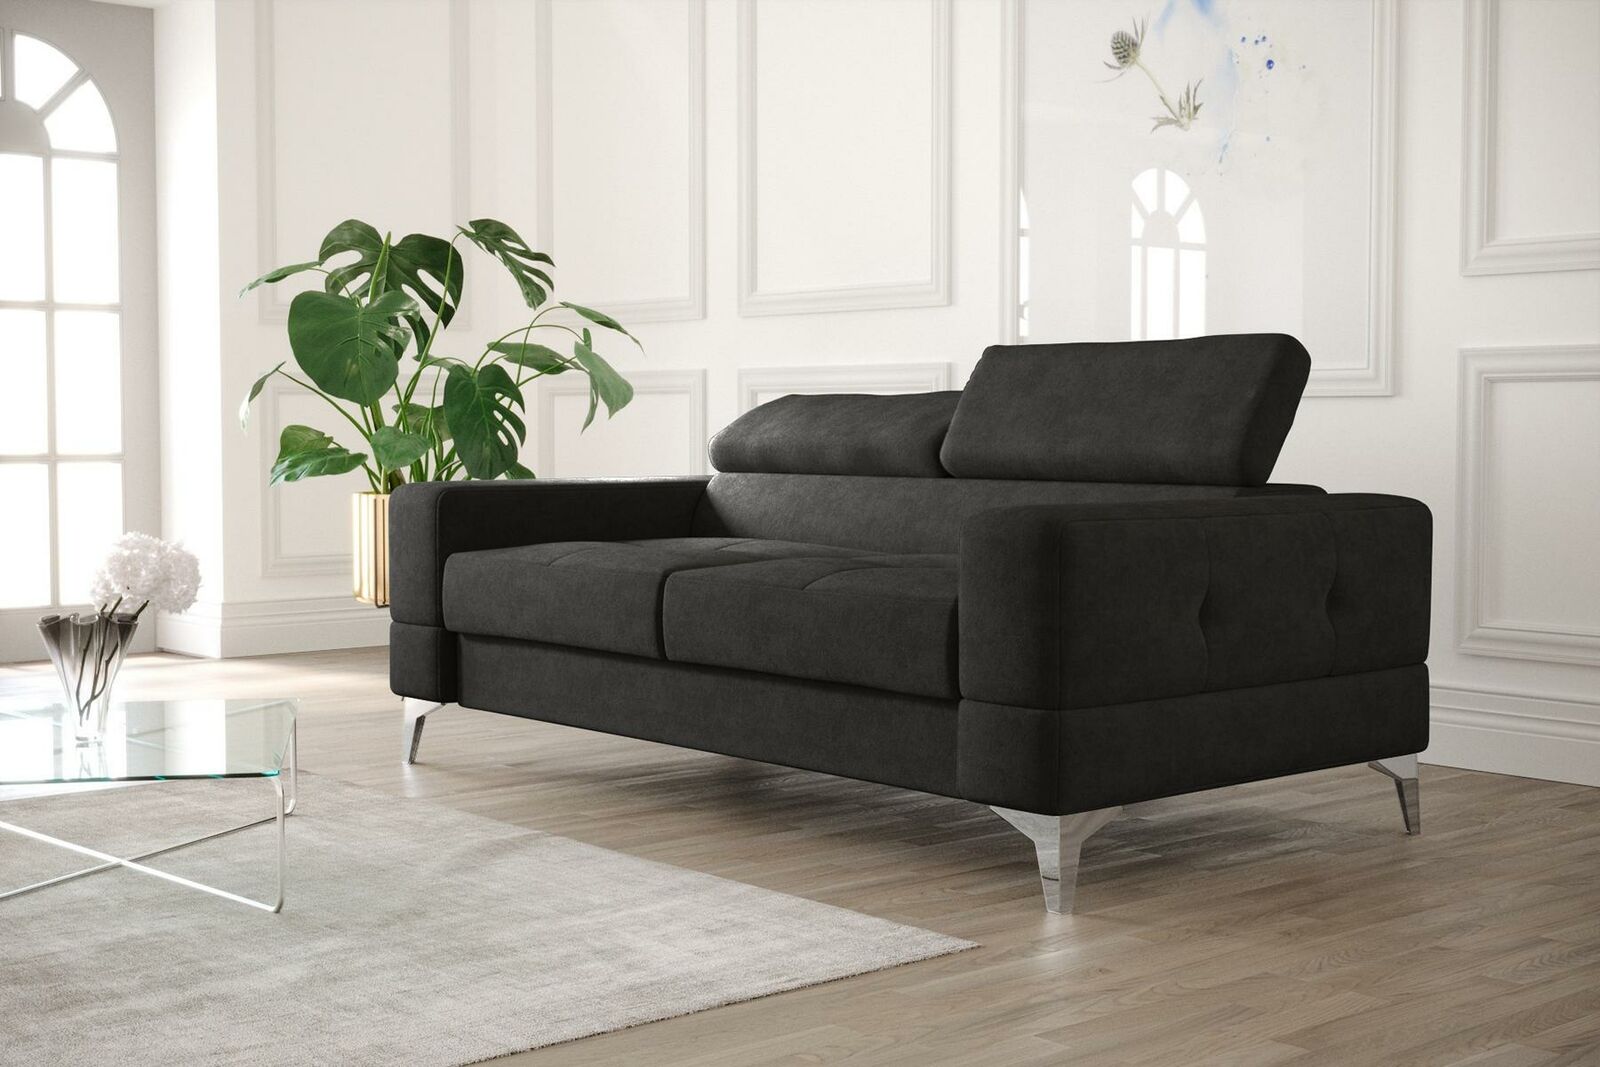 Zweisitzer Ledersofa Couch Holz Couch Polster Sofa 2 Sitzer Textil Couchen Neu